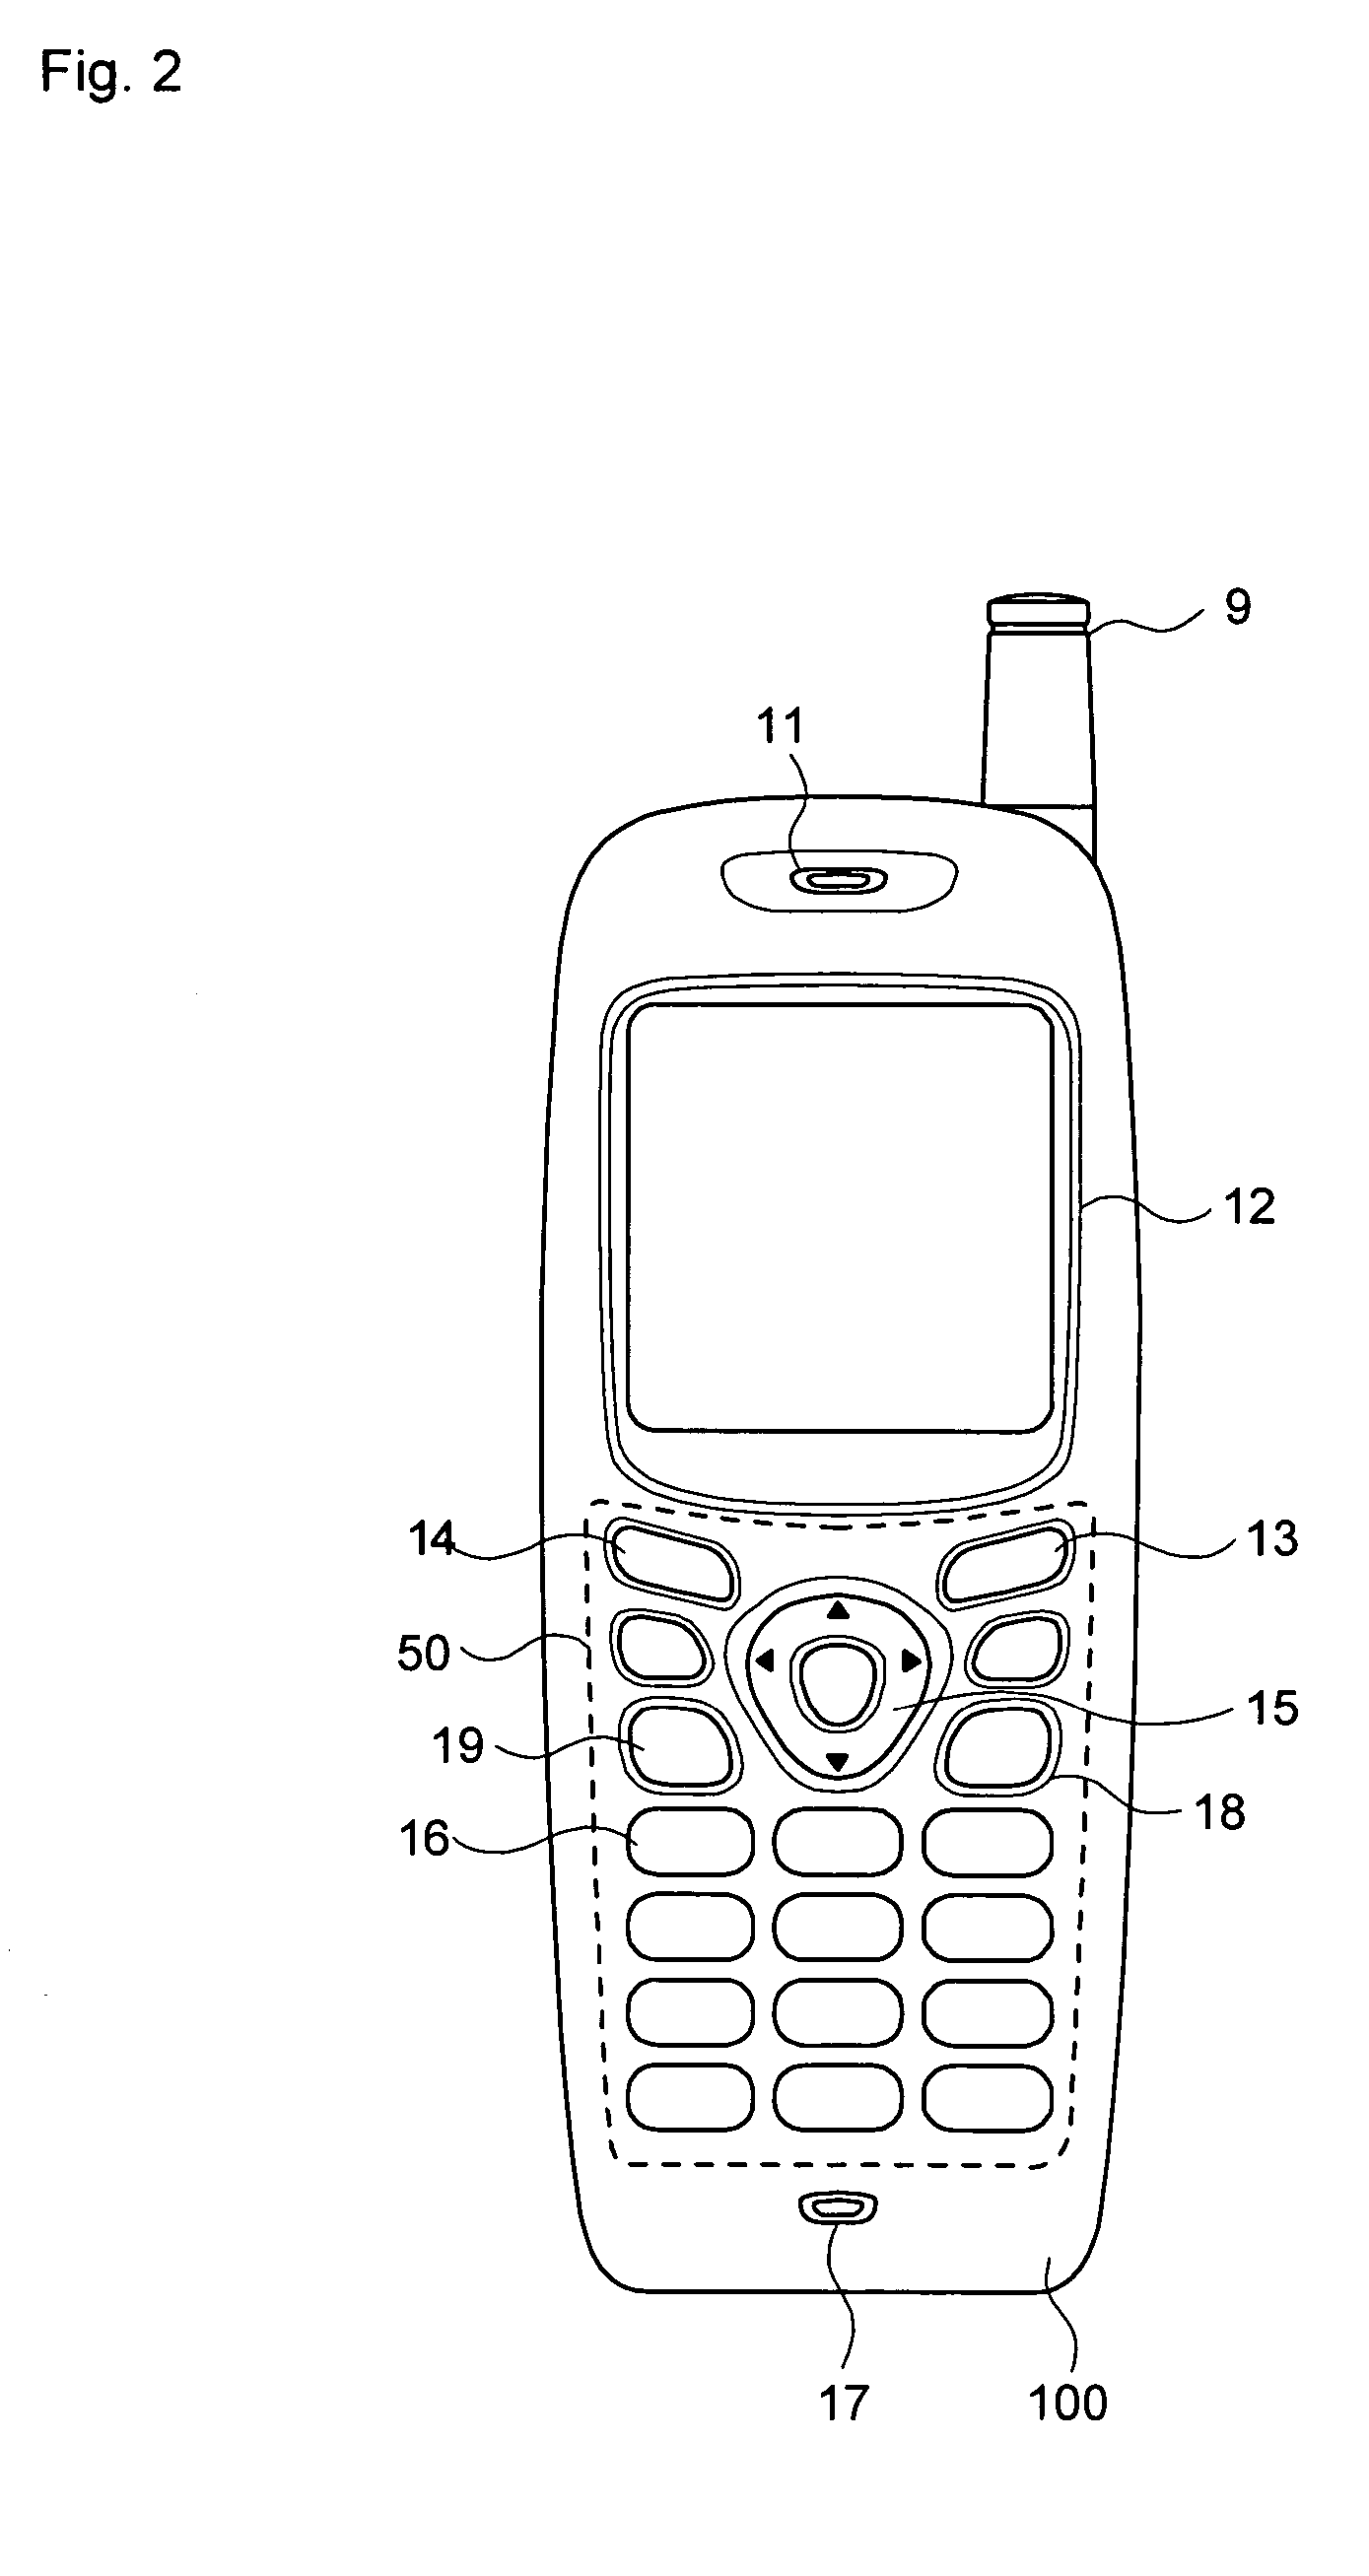 Cellular phone